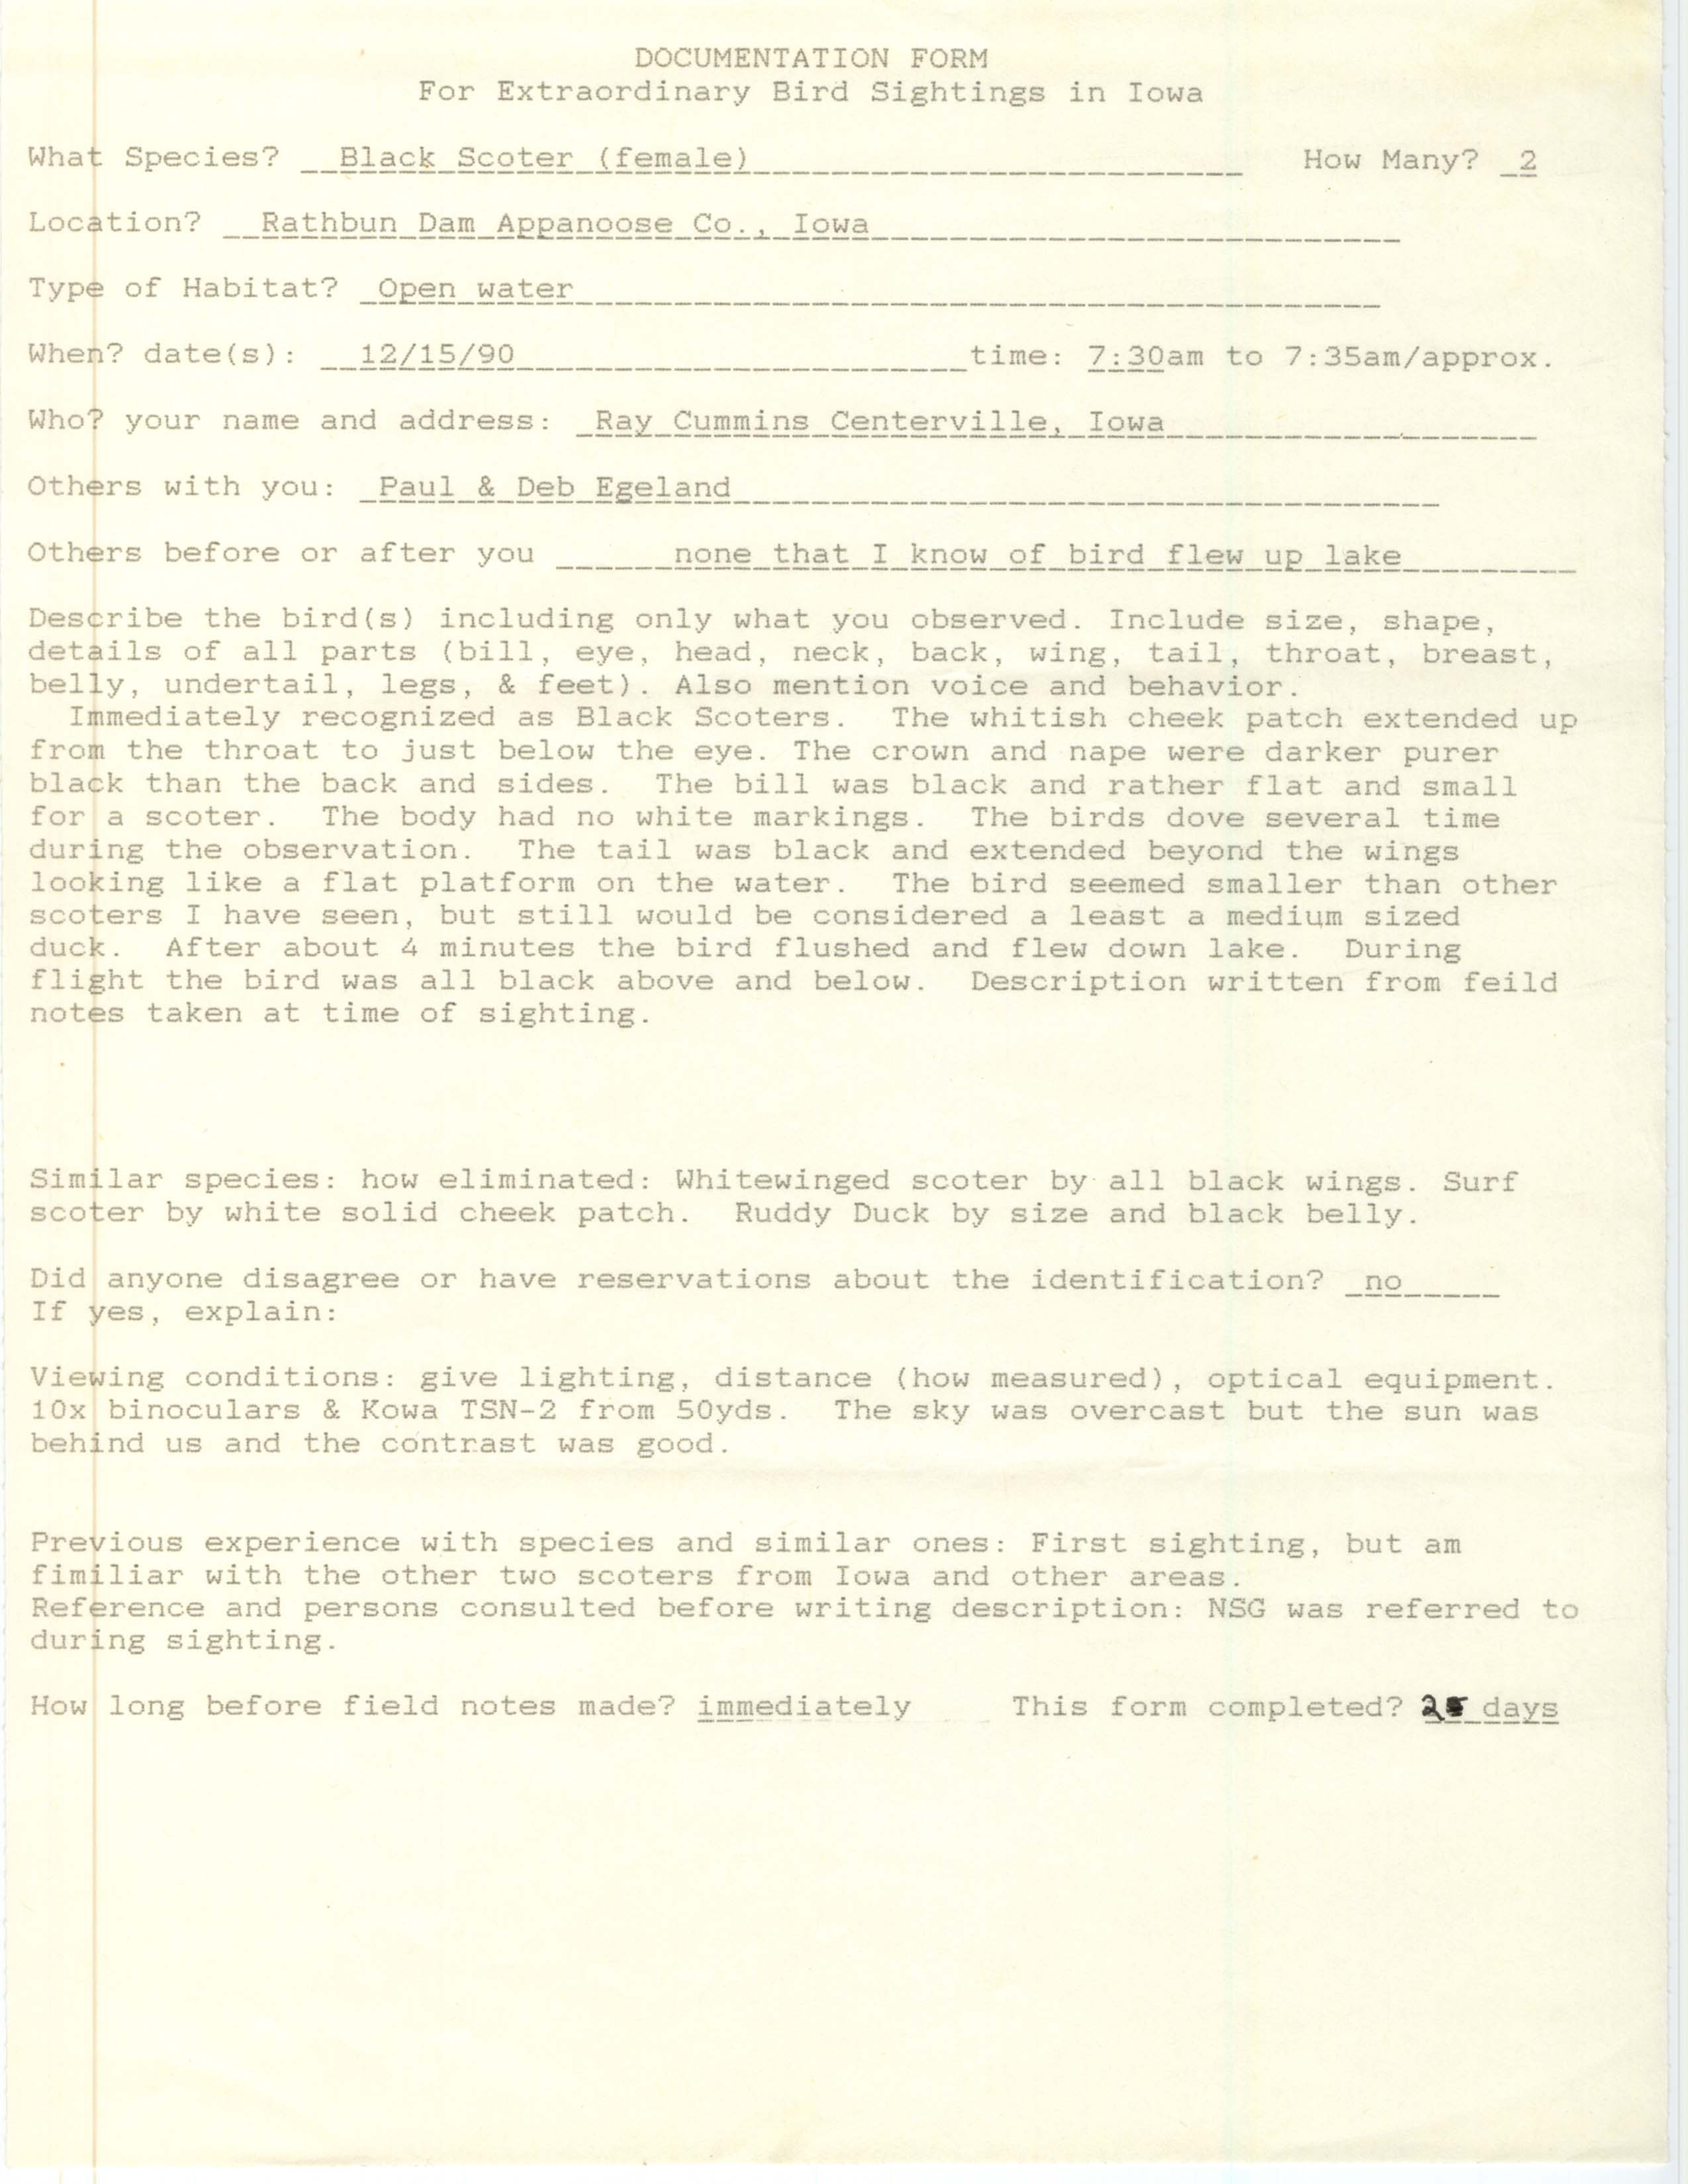 Rare bird documentation form for Black Scoter at Rathbun Dam, 1990